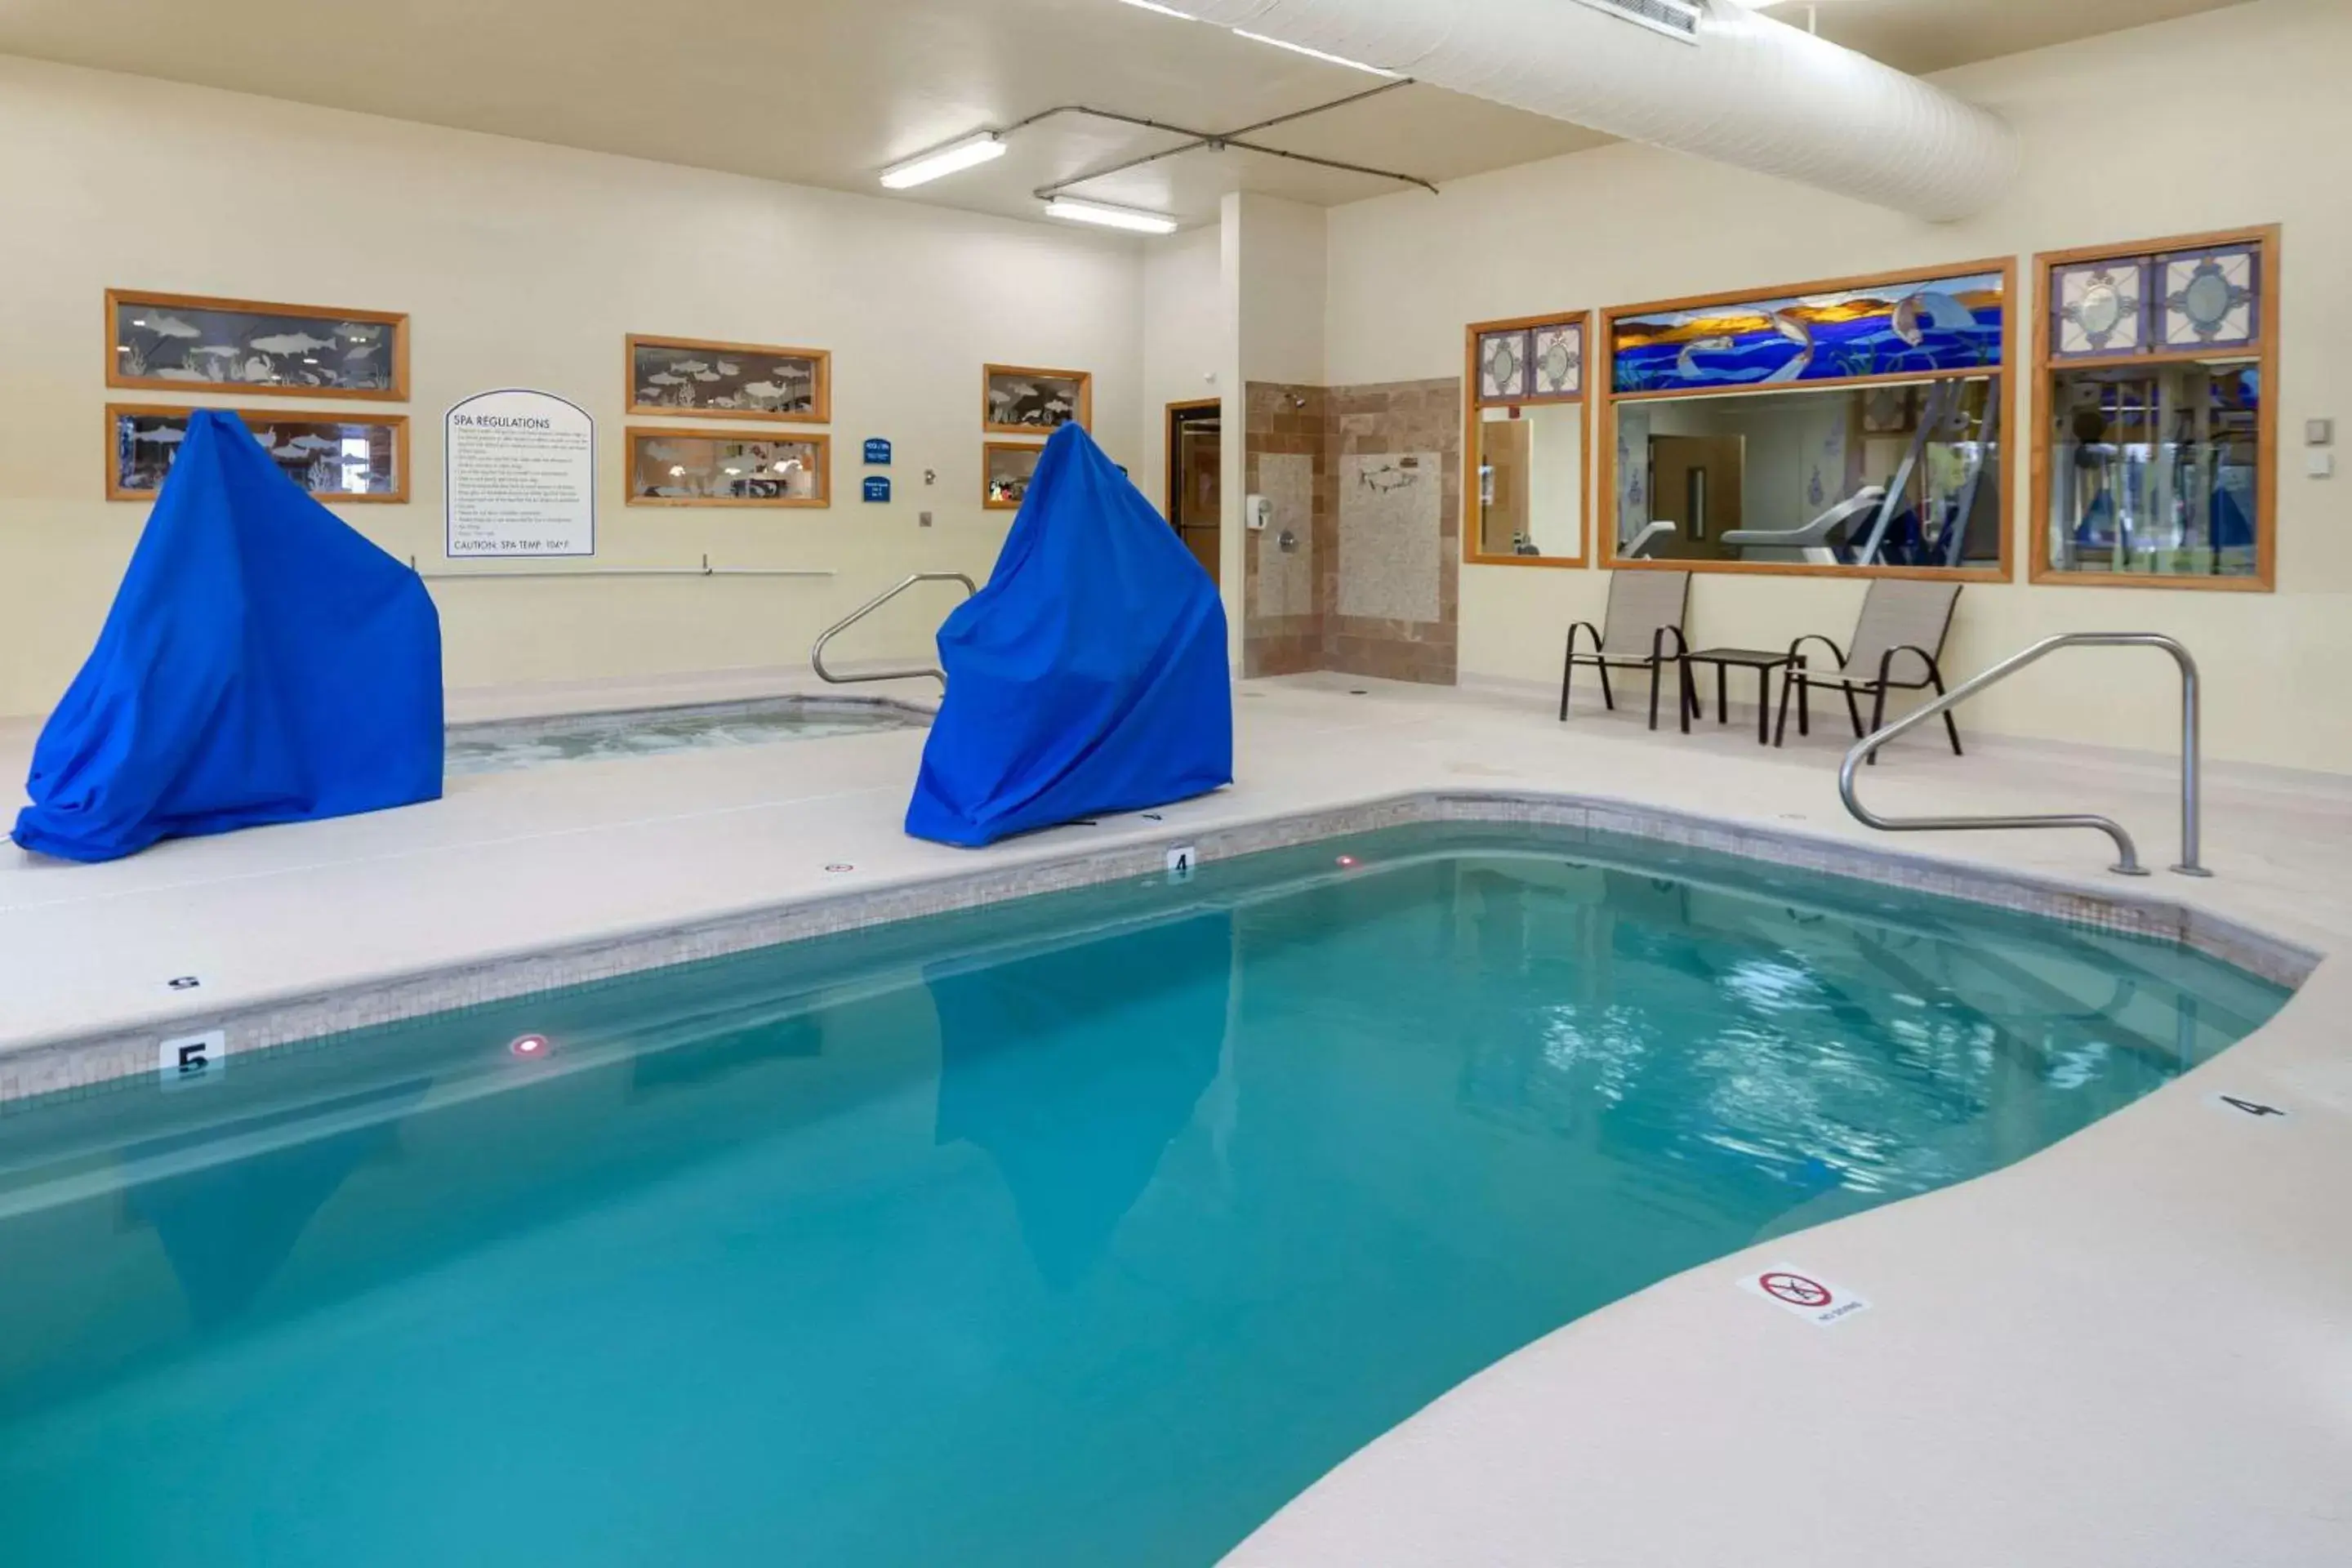 On site, Swimming Pool in Quality Inn Kenai